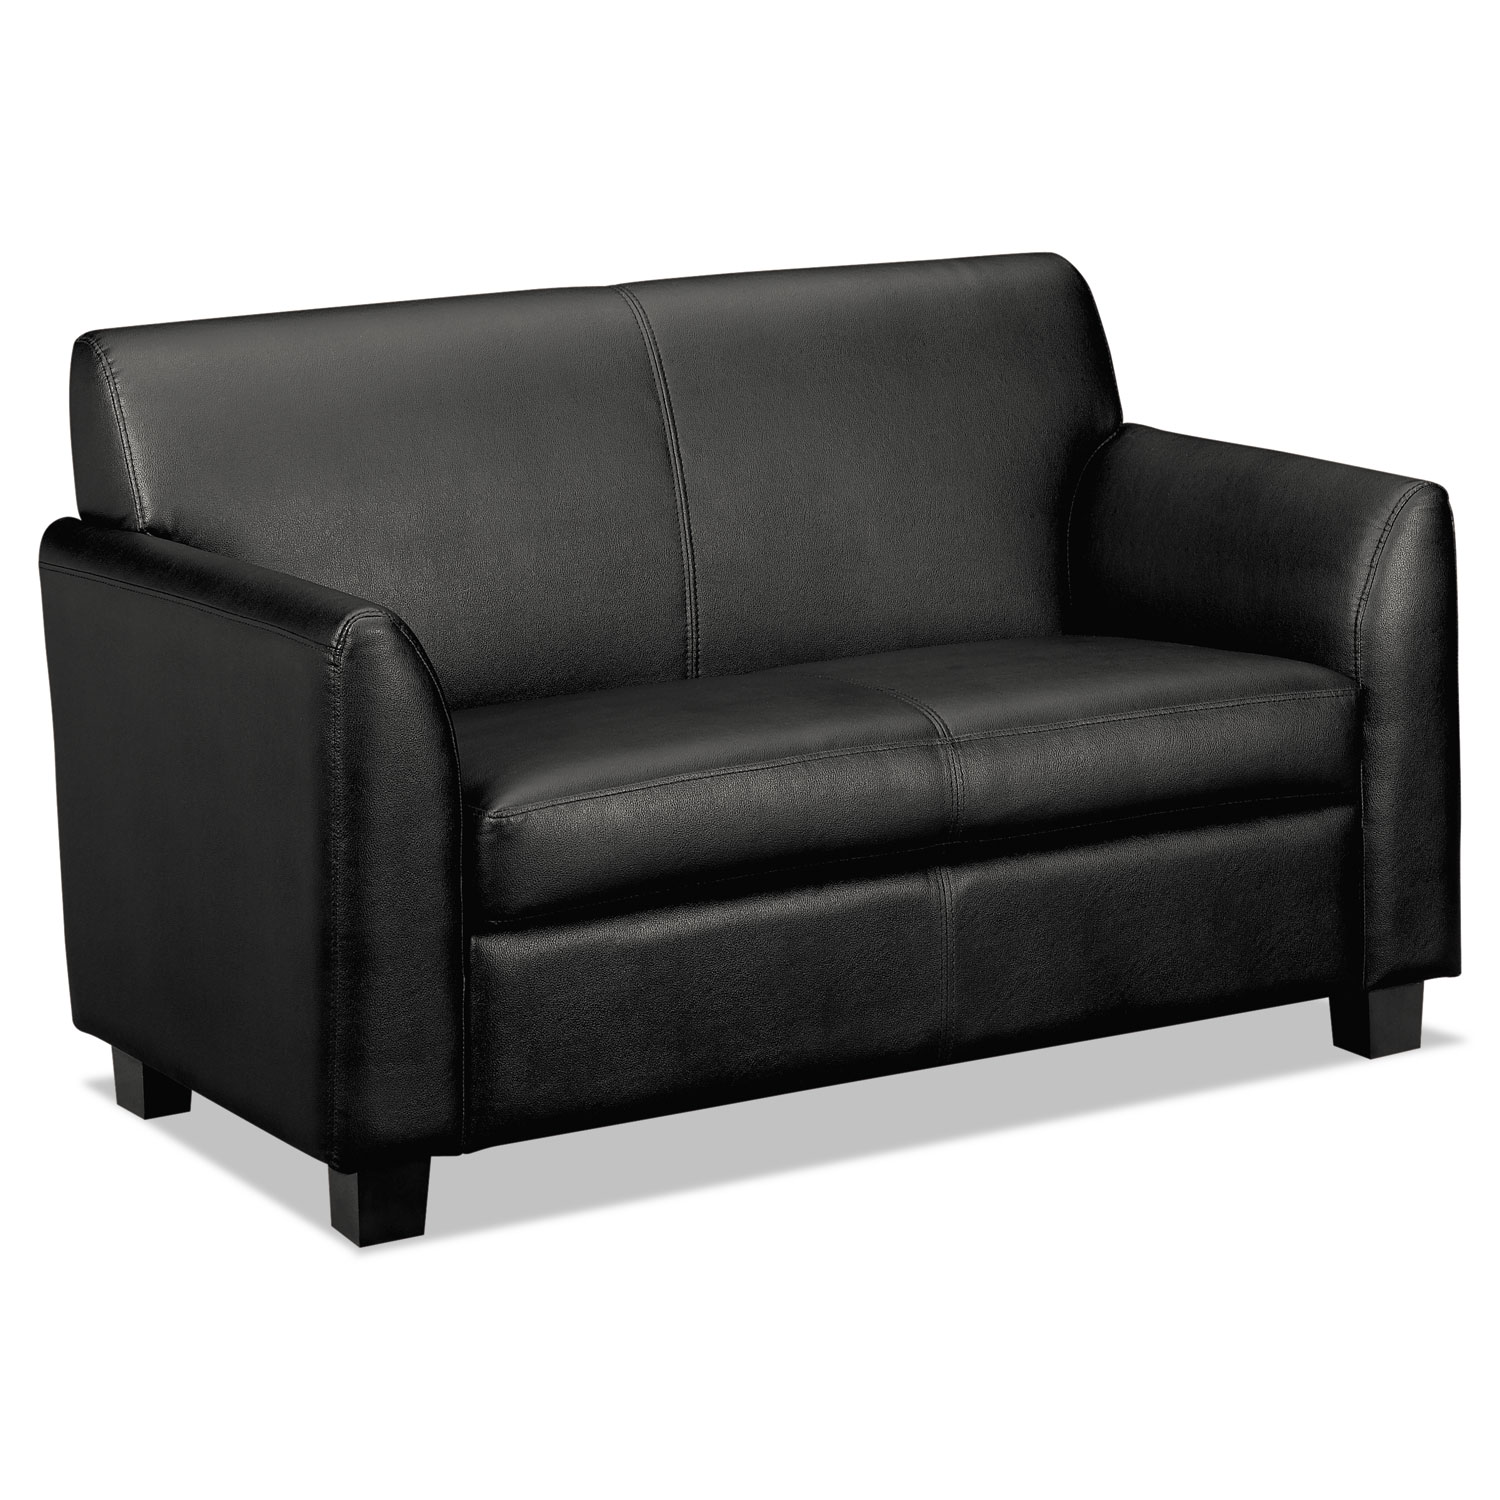 VL870 Series Leather Reception Two-Cushion Loveseat, 53 1/2 x 28 3/4 x 32, Black